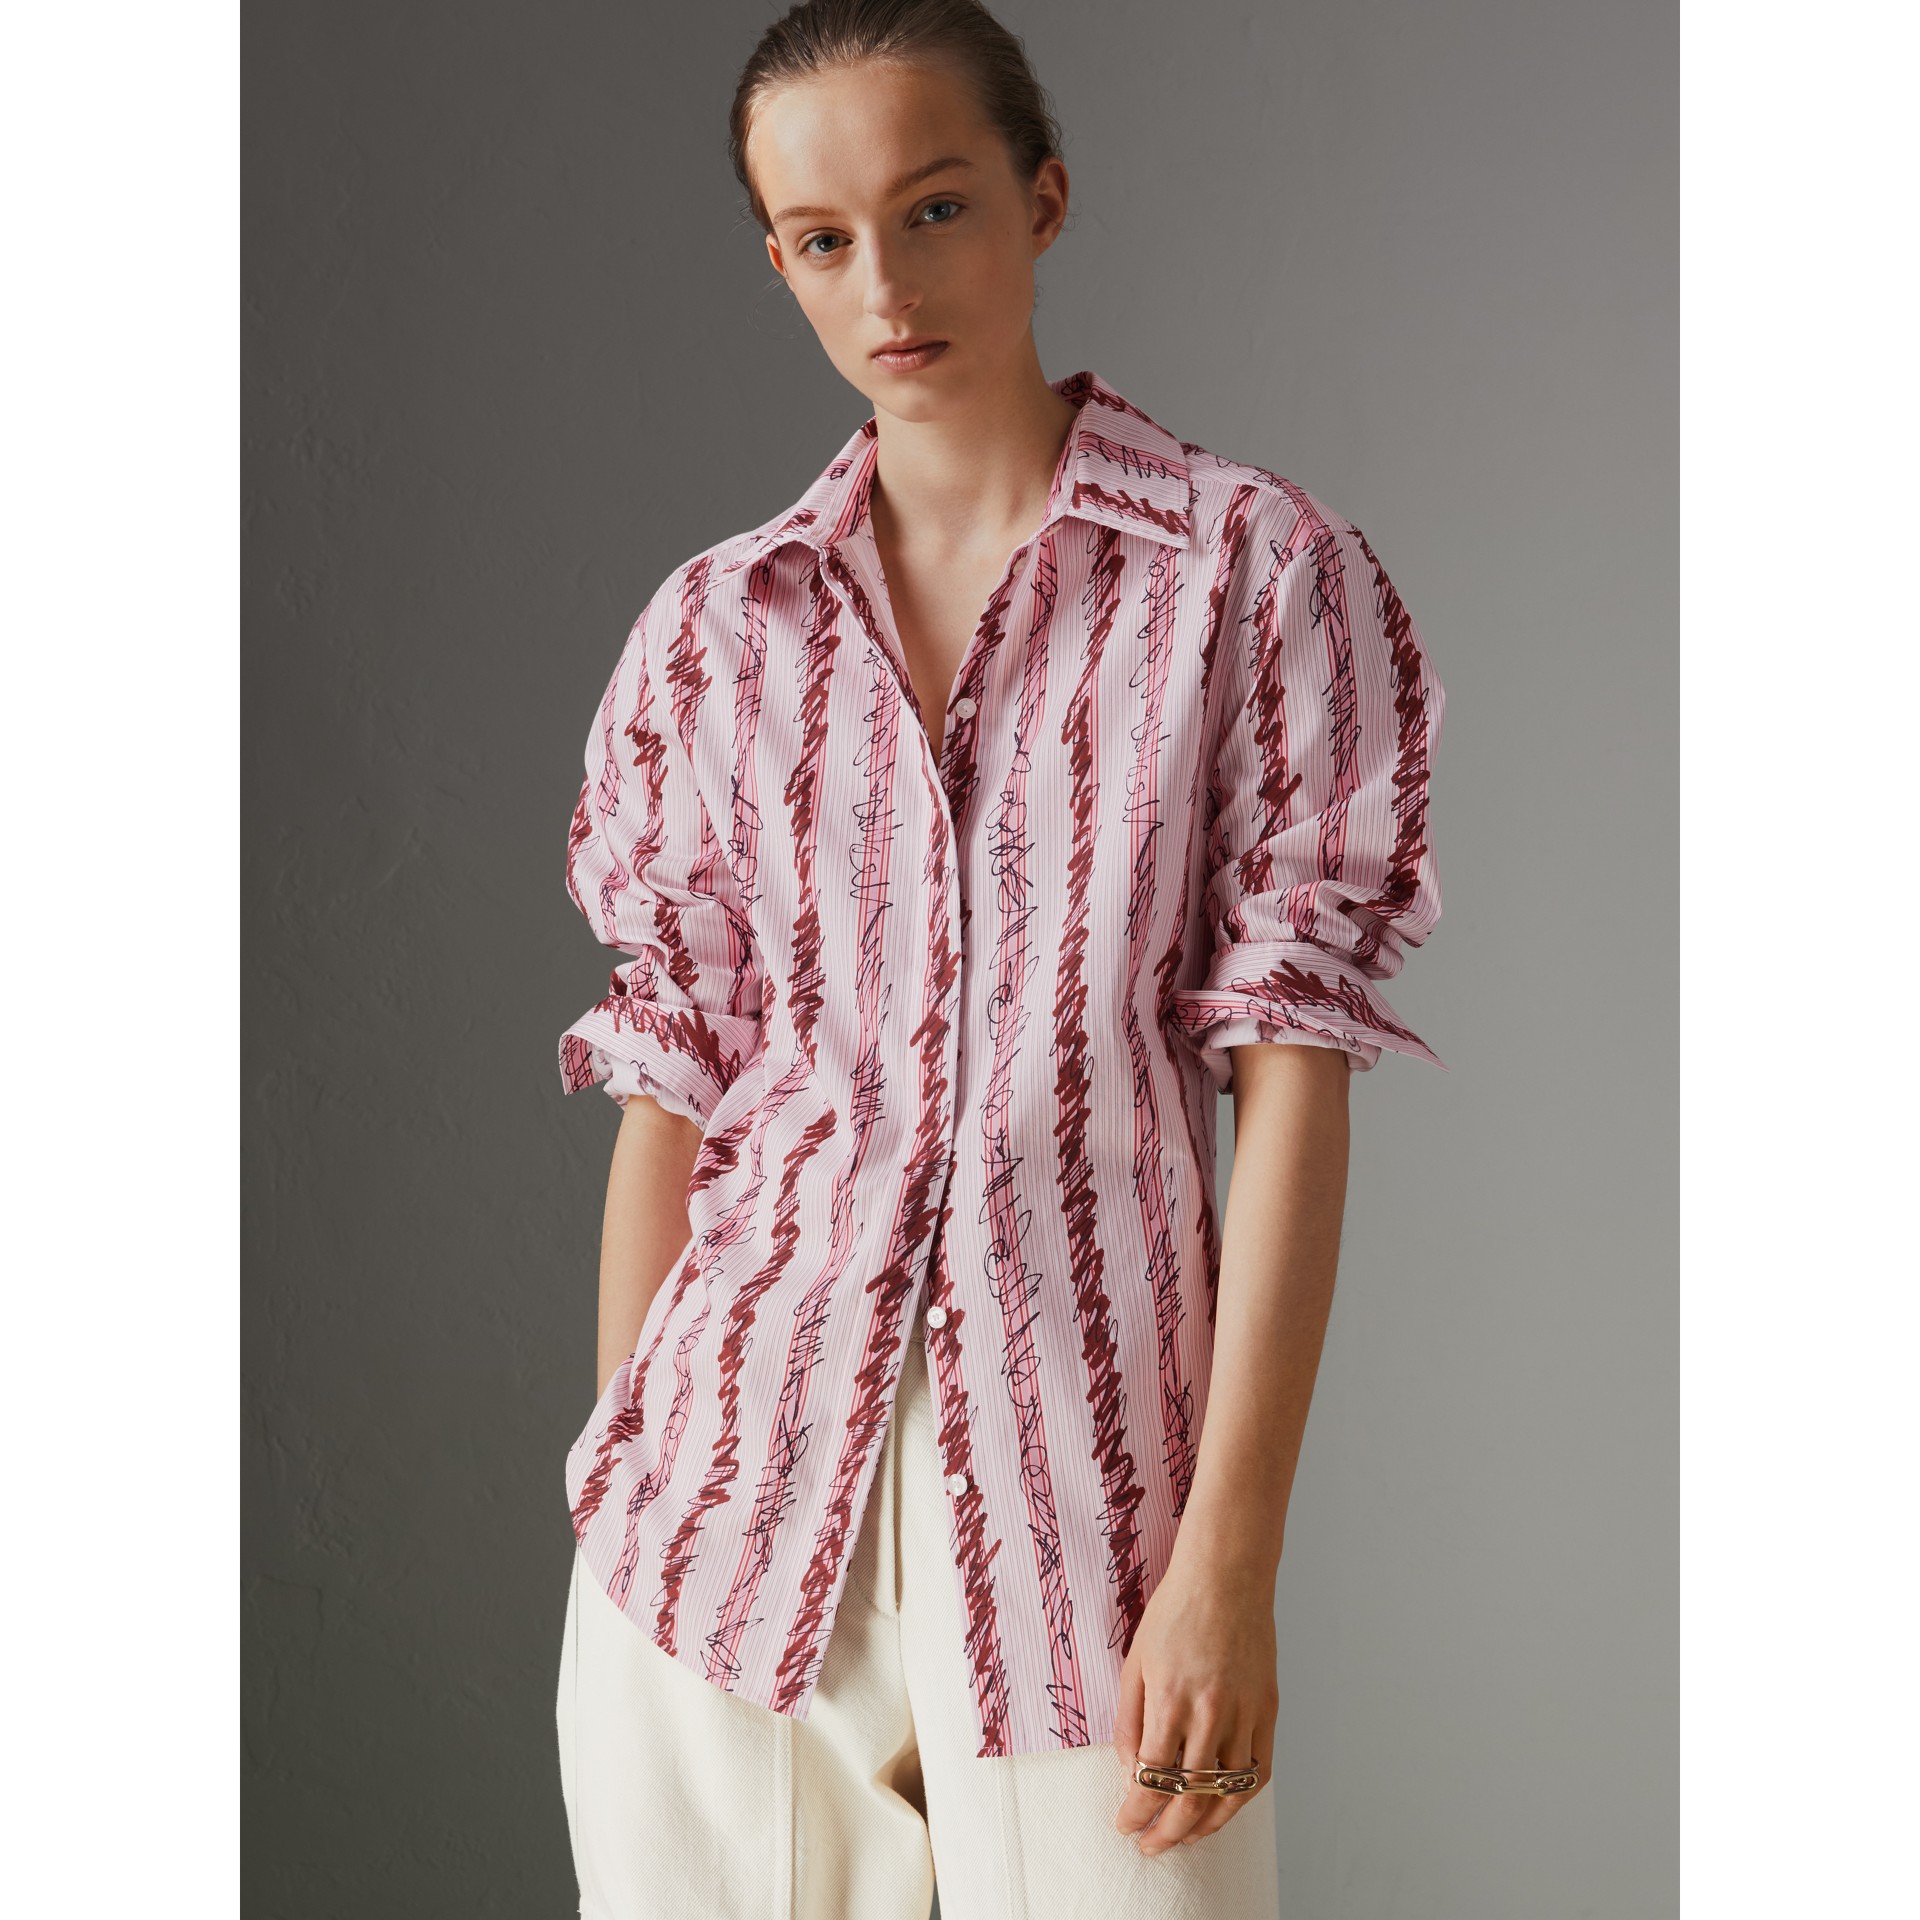 BURBERRY Scribble Stripe Cotton Shirt,80021721